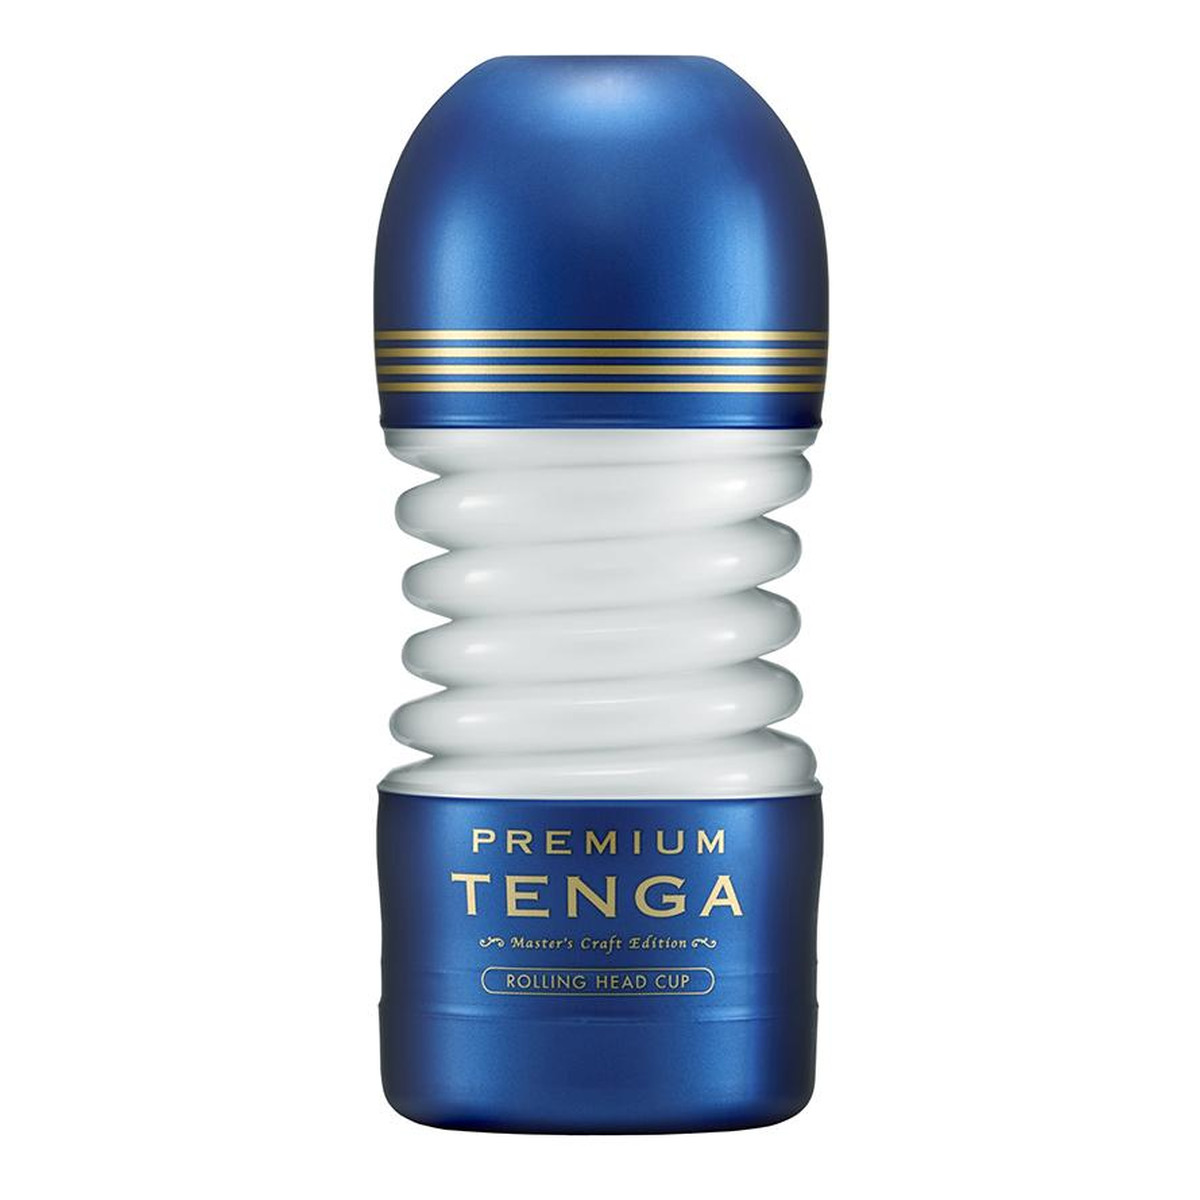 Tenga Premium rolling head cup jednorazowy elastyczny masturbator